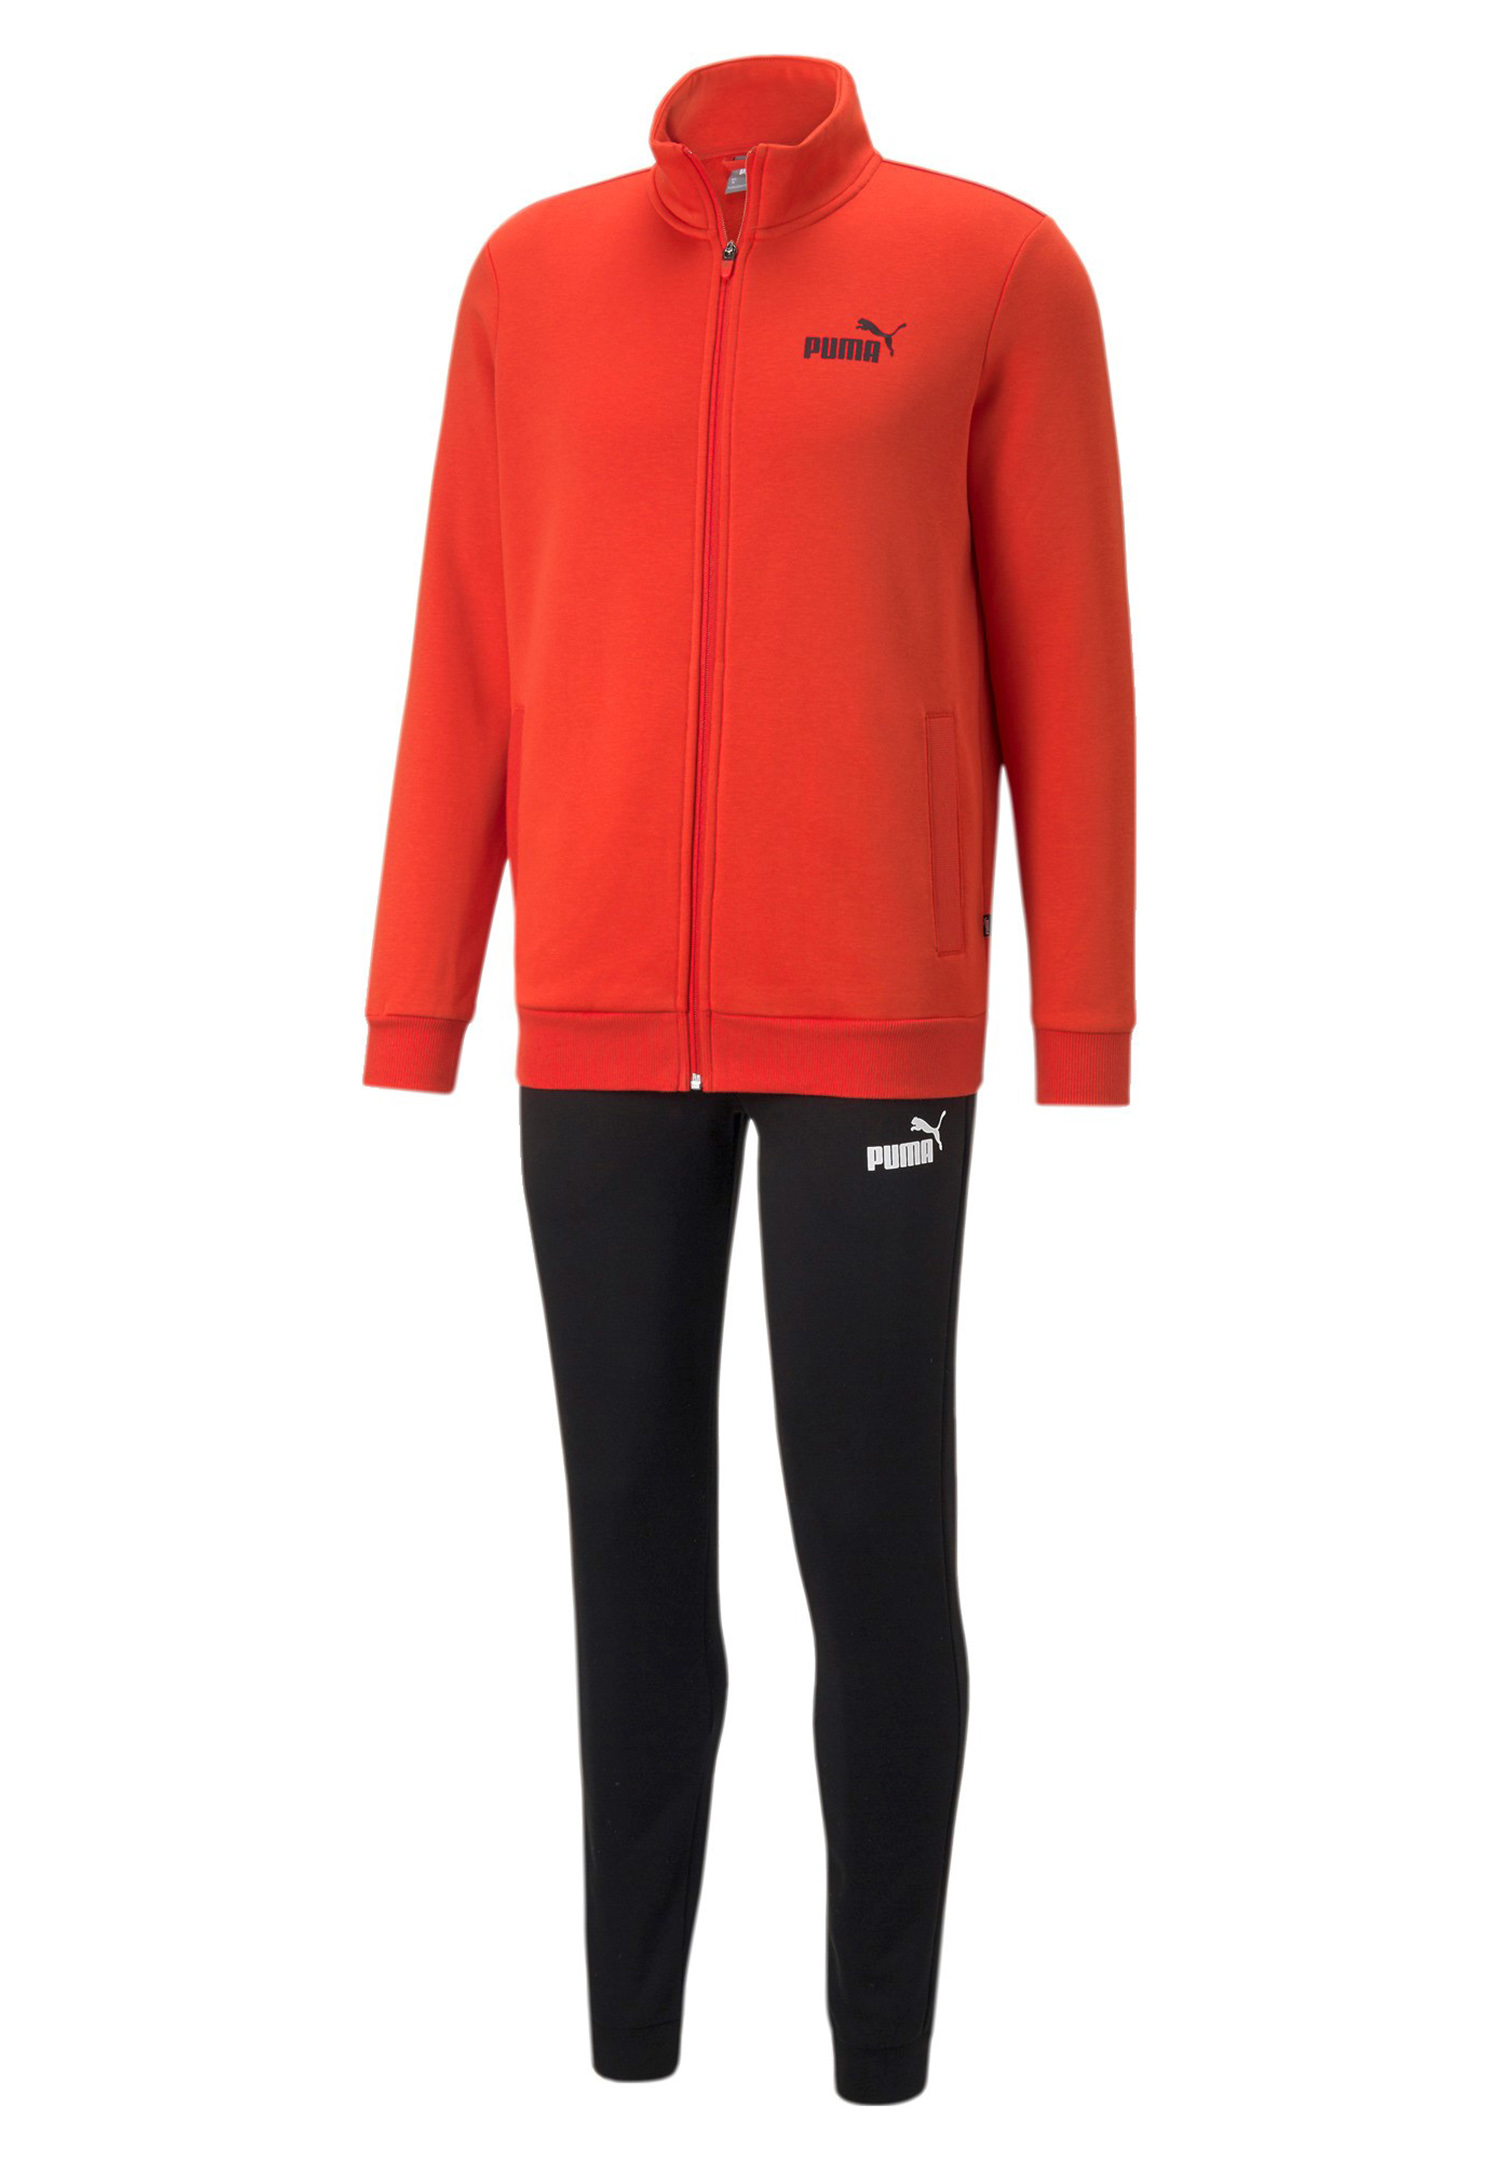 PUMA Herren Clean Sweat Suit FL Trainingsanzug Jogginganzug 585841 rot